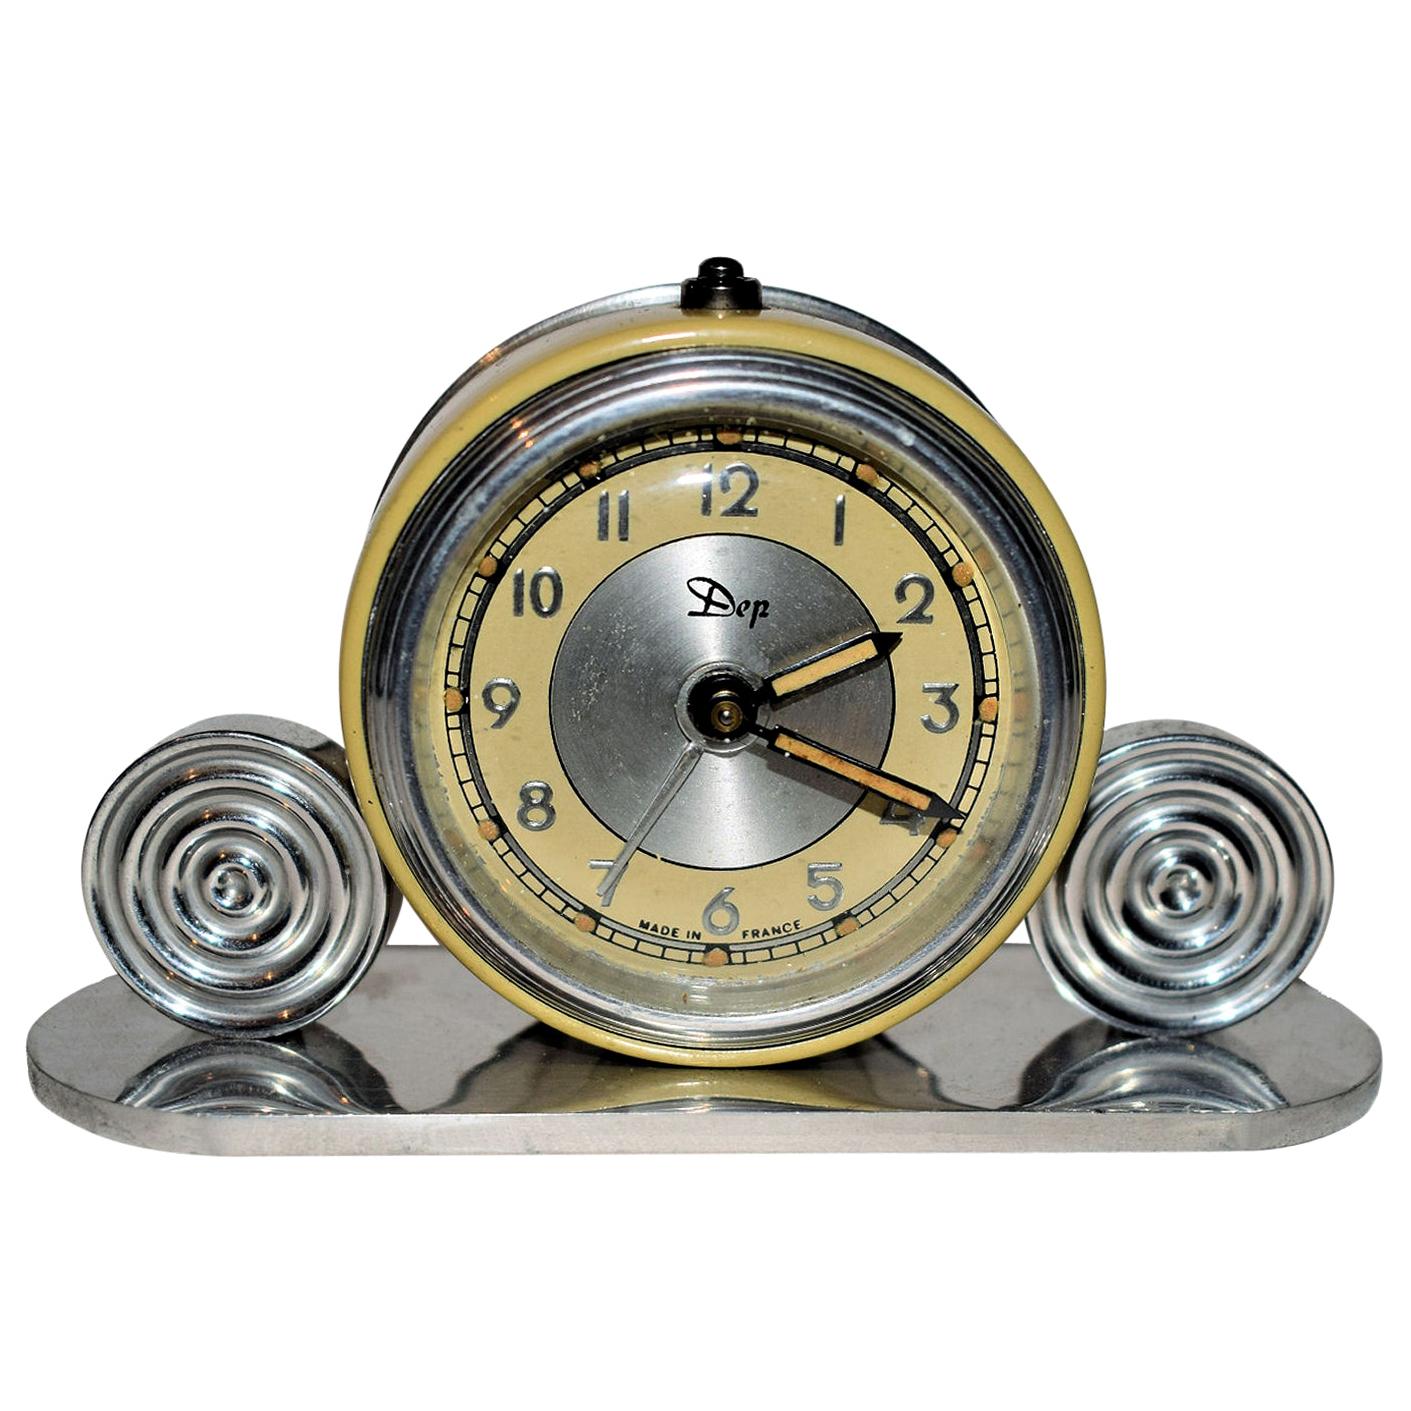 1930s Art Deco Miniature Alarm Clock by Dep